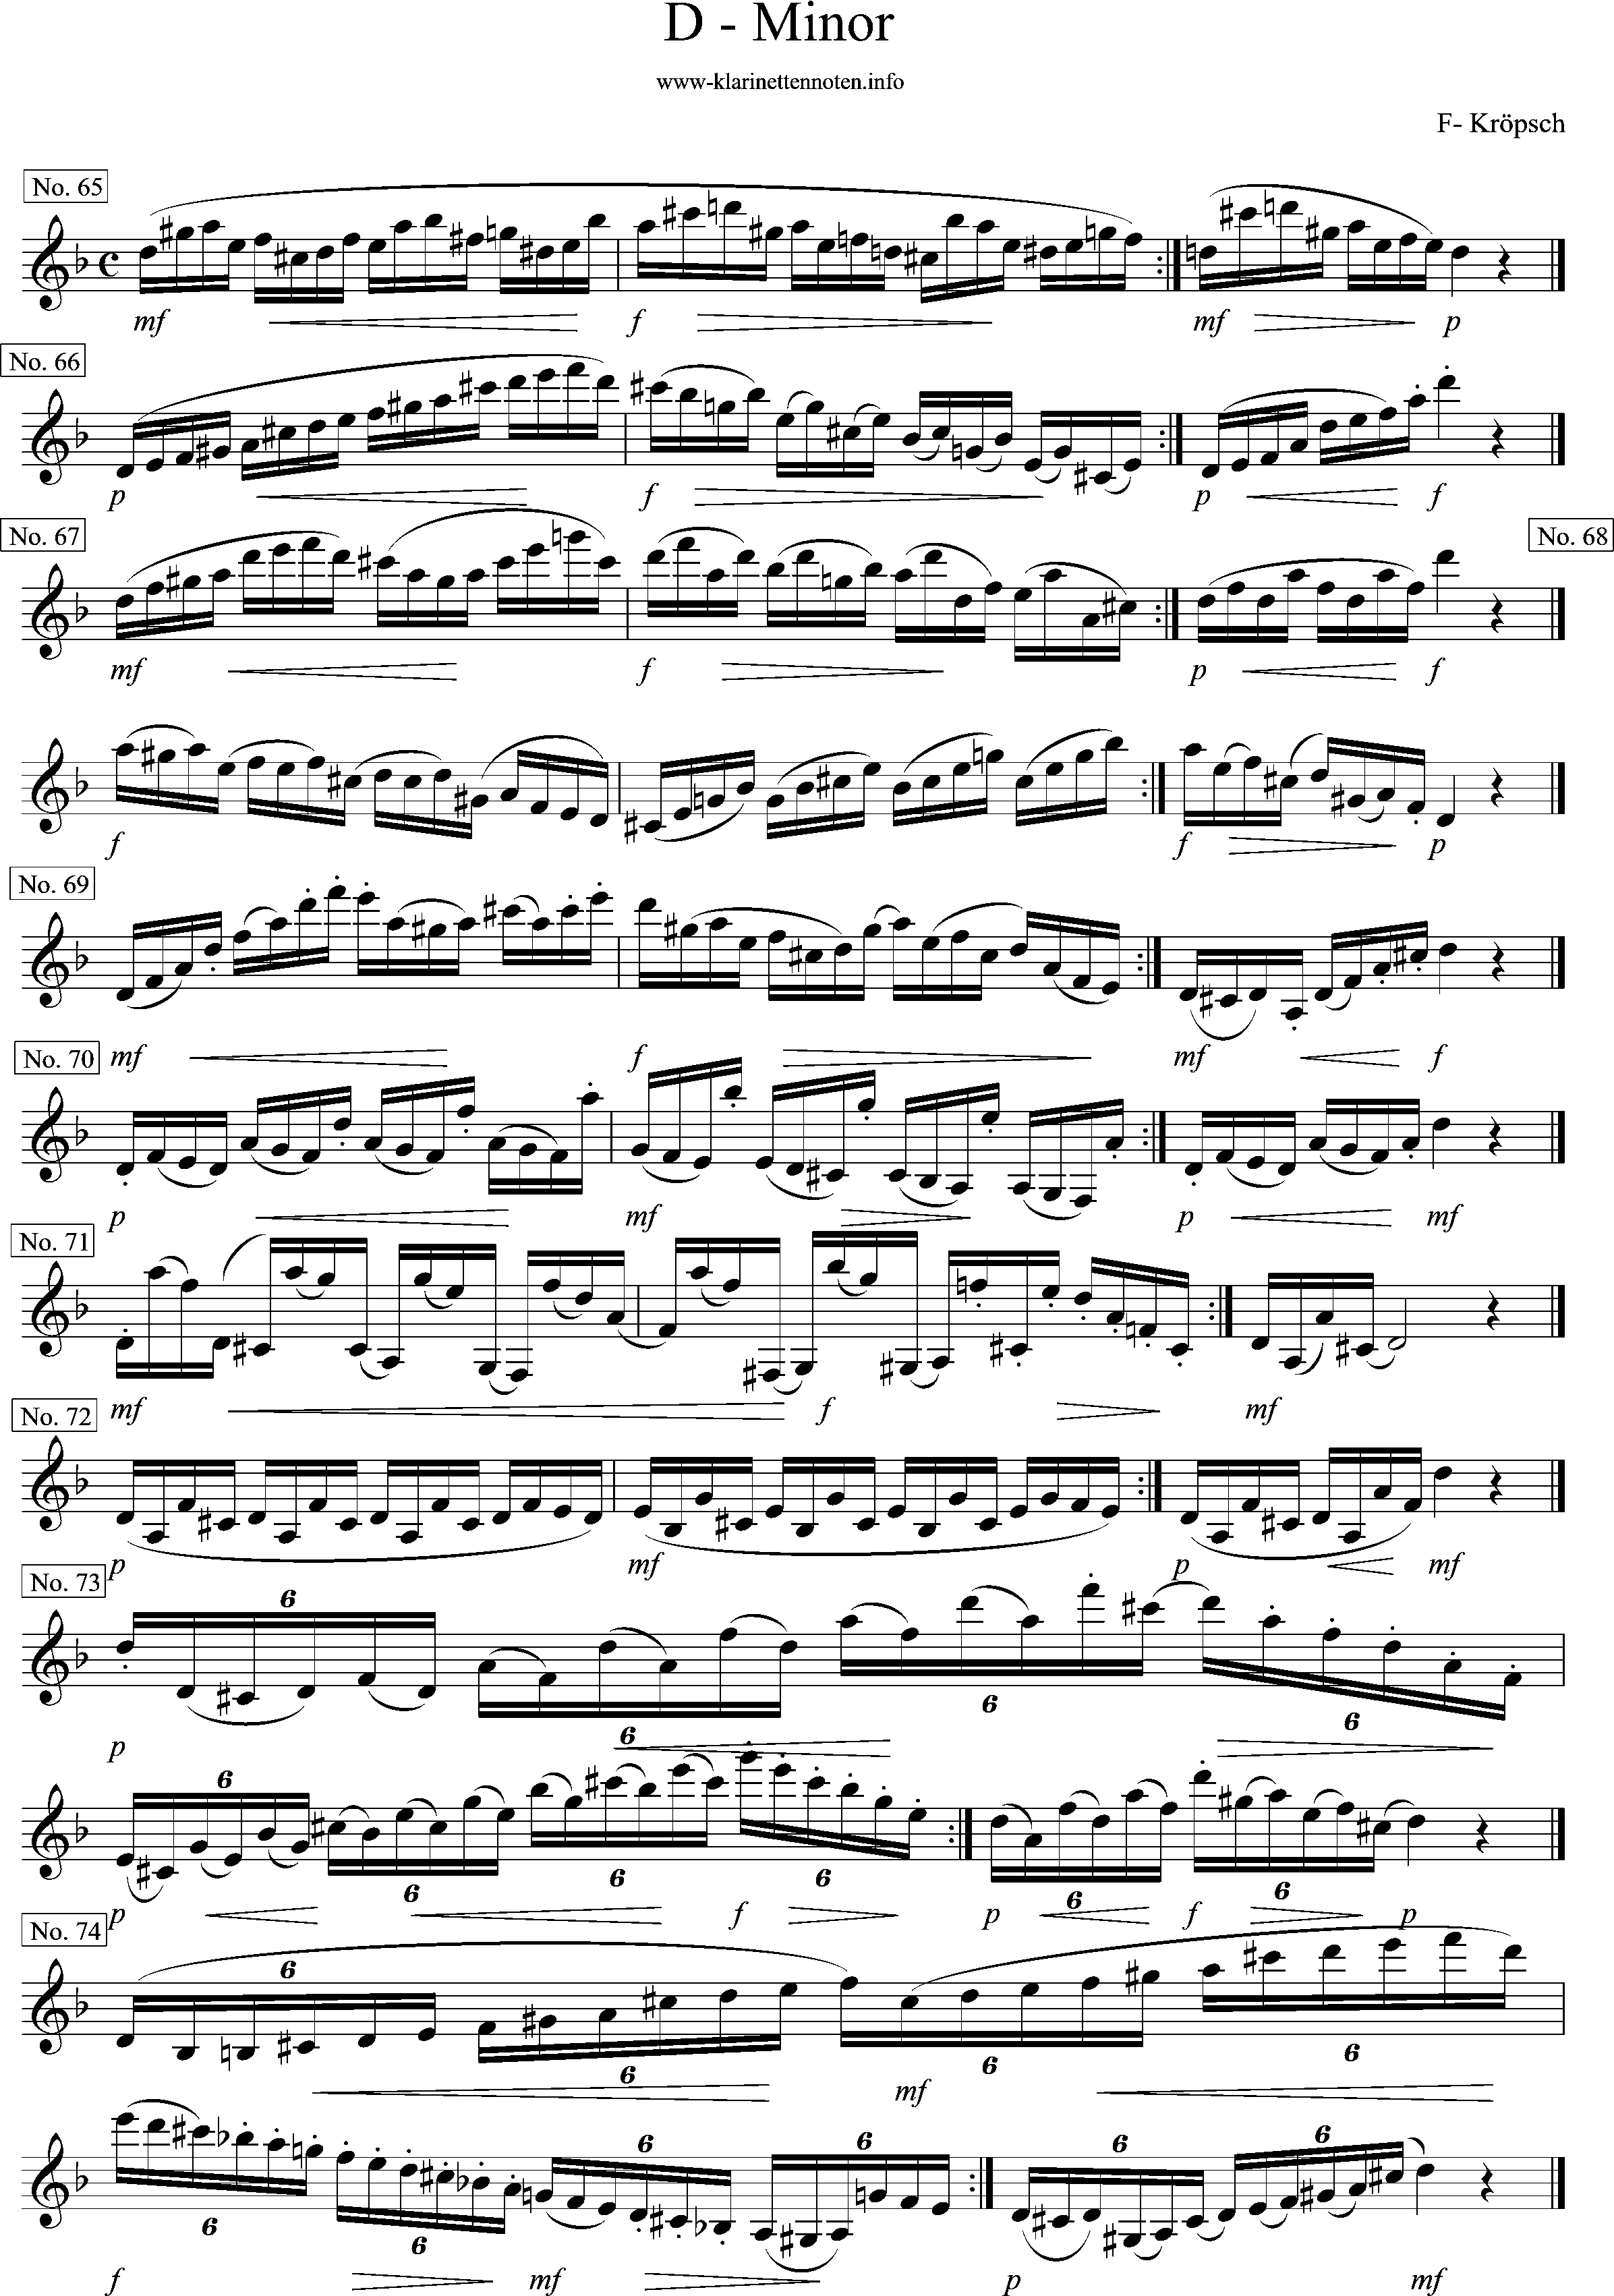 416 etudes, Fritz Kröpsch, d-minor, seite 1